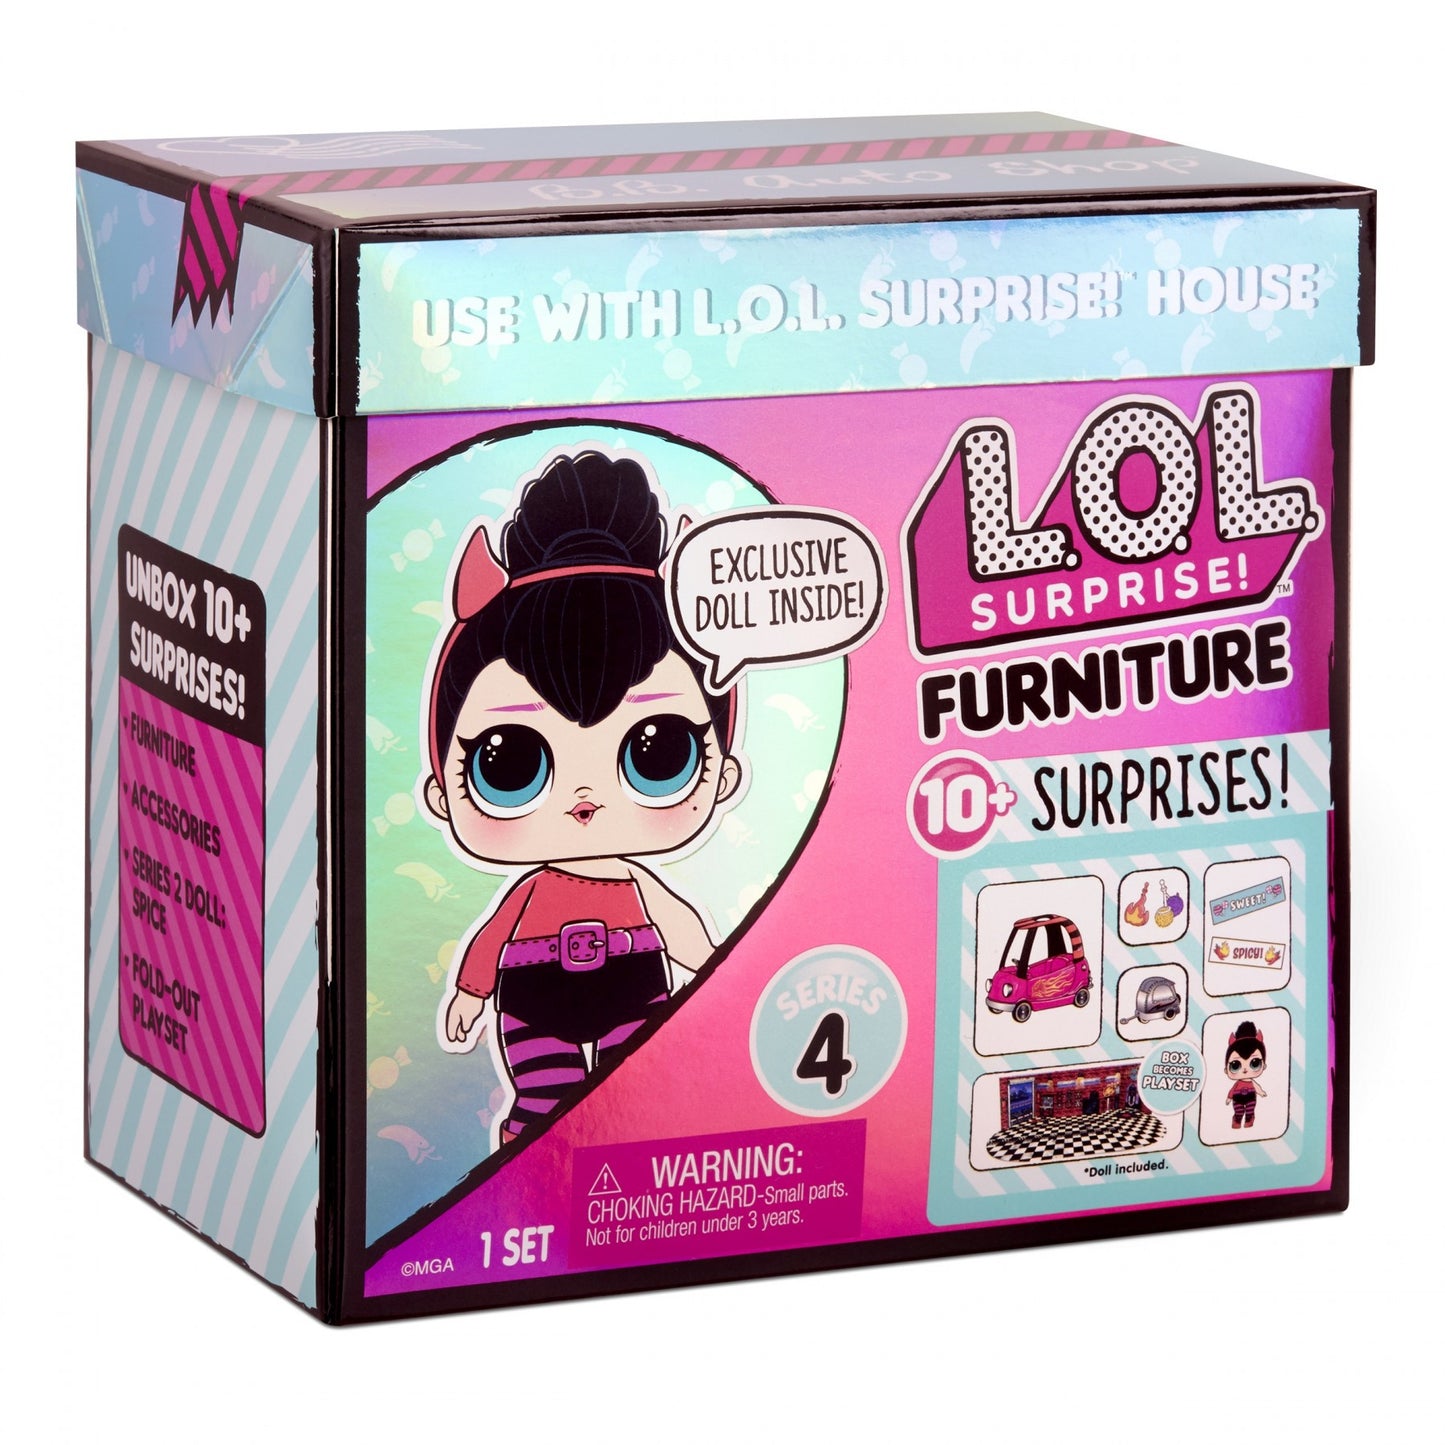 Set de joaca LOL Surprise Furniture BB Auto Shop, S4 cu papusa Spice si 10 surprize